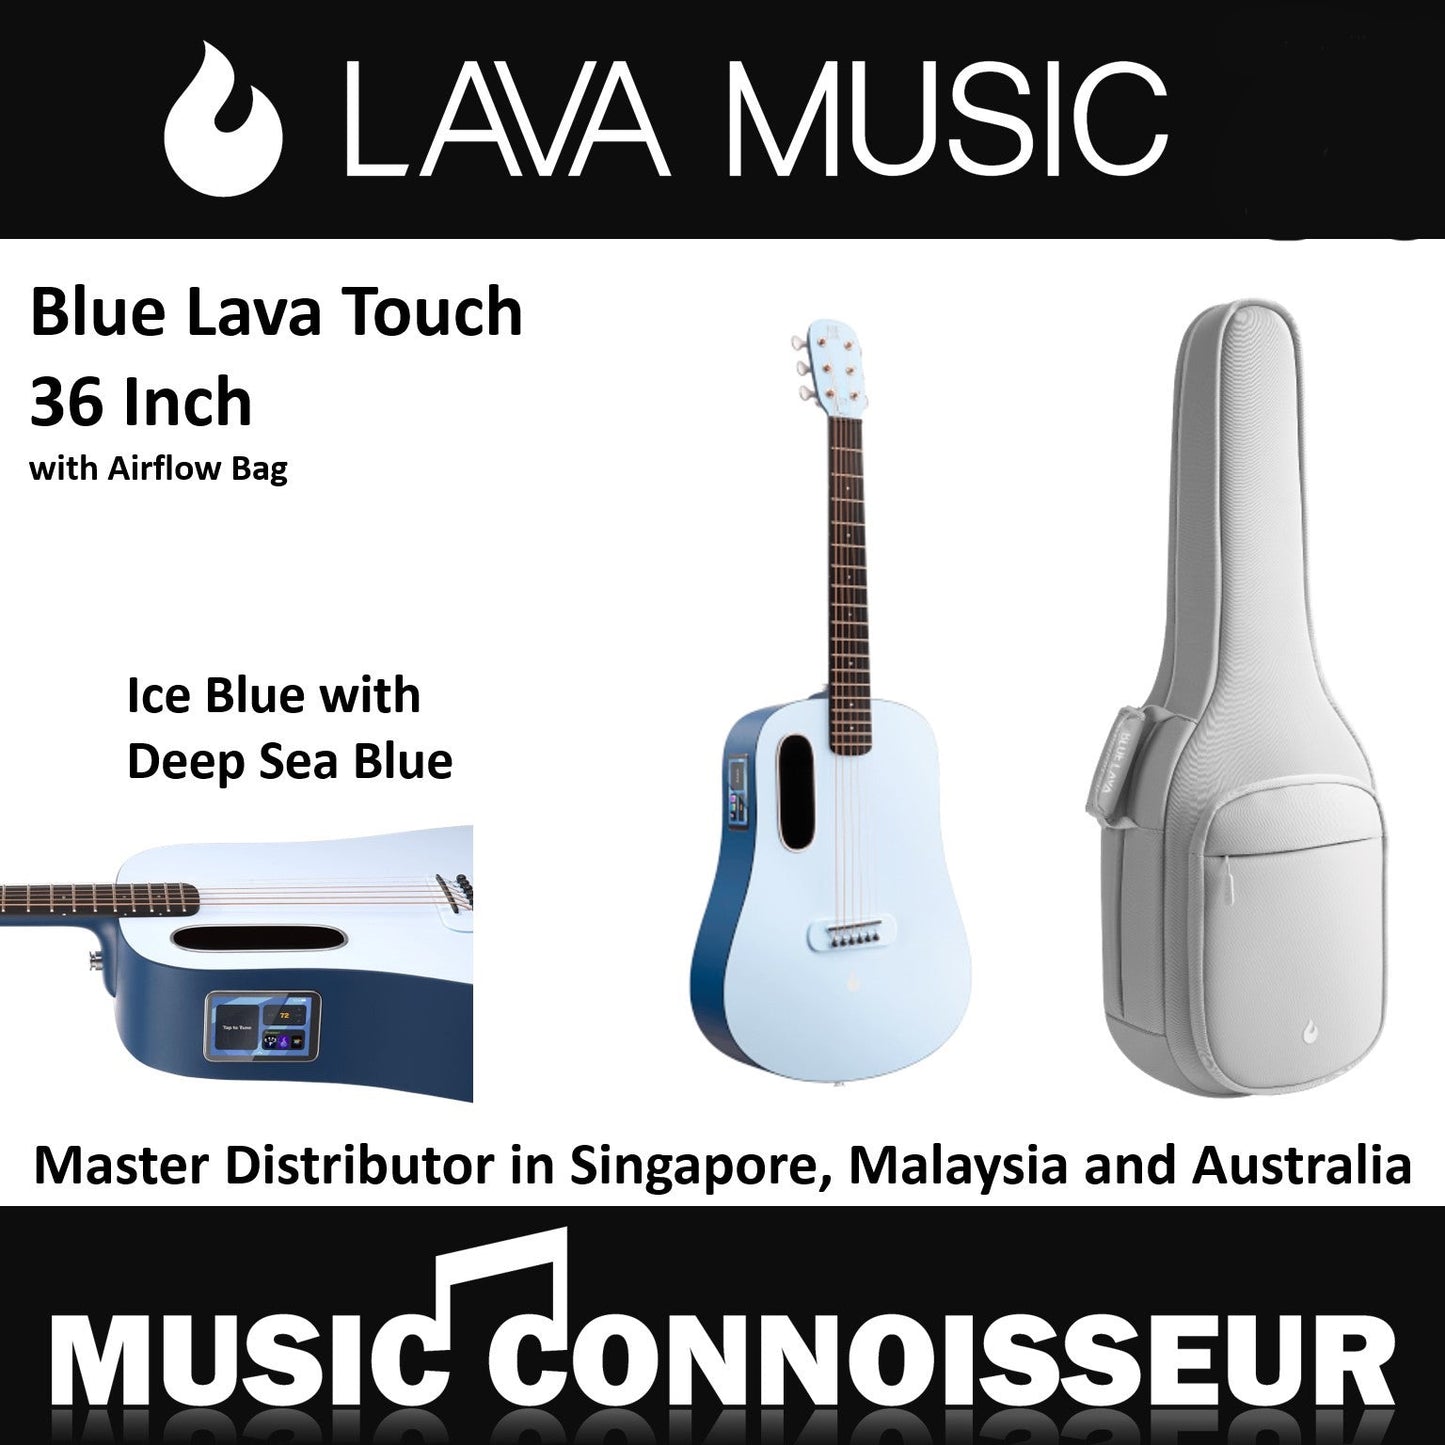 Blue Lava 36" Smart Guitar(Ice Blue with Deep Sea Blue) - Display